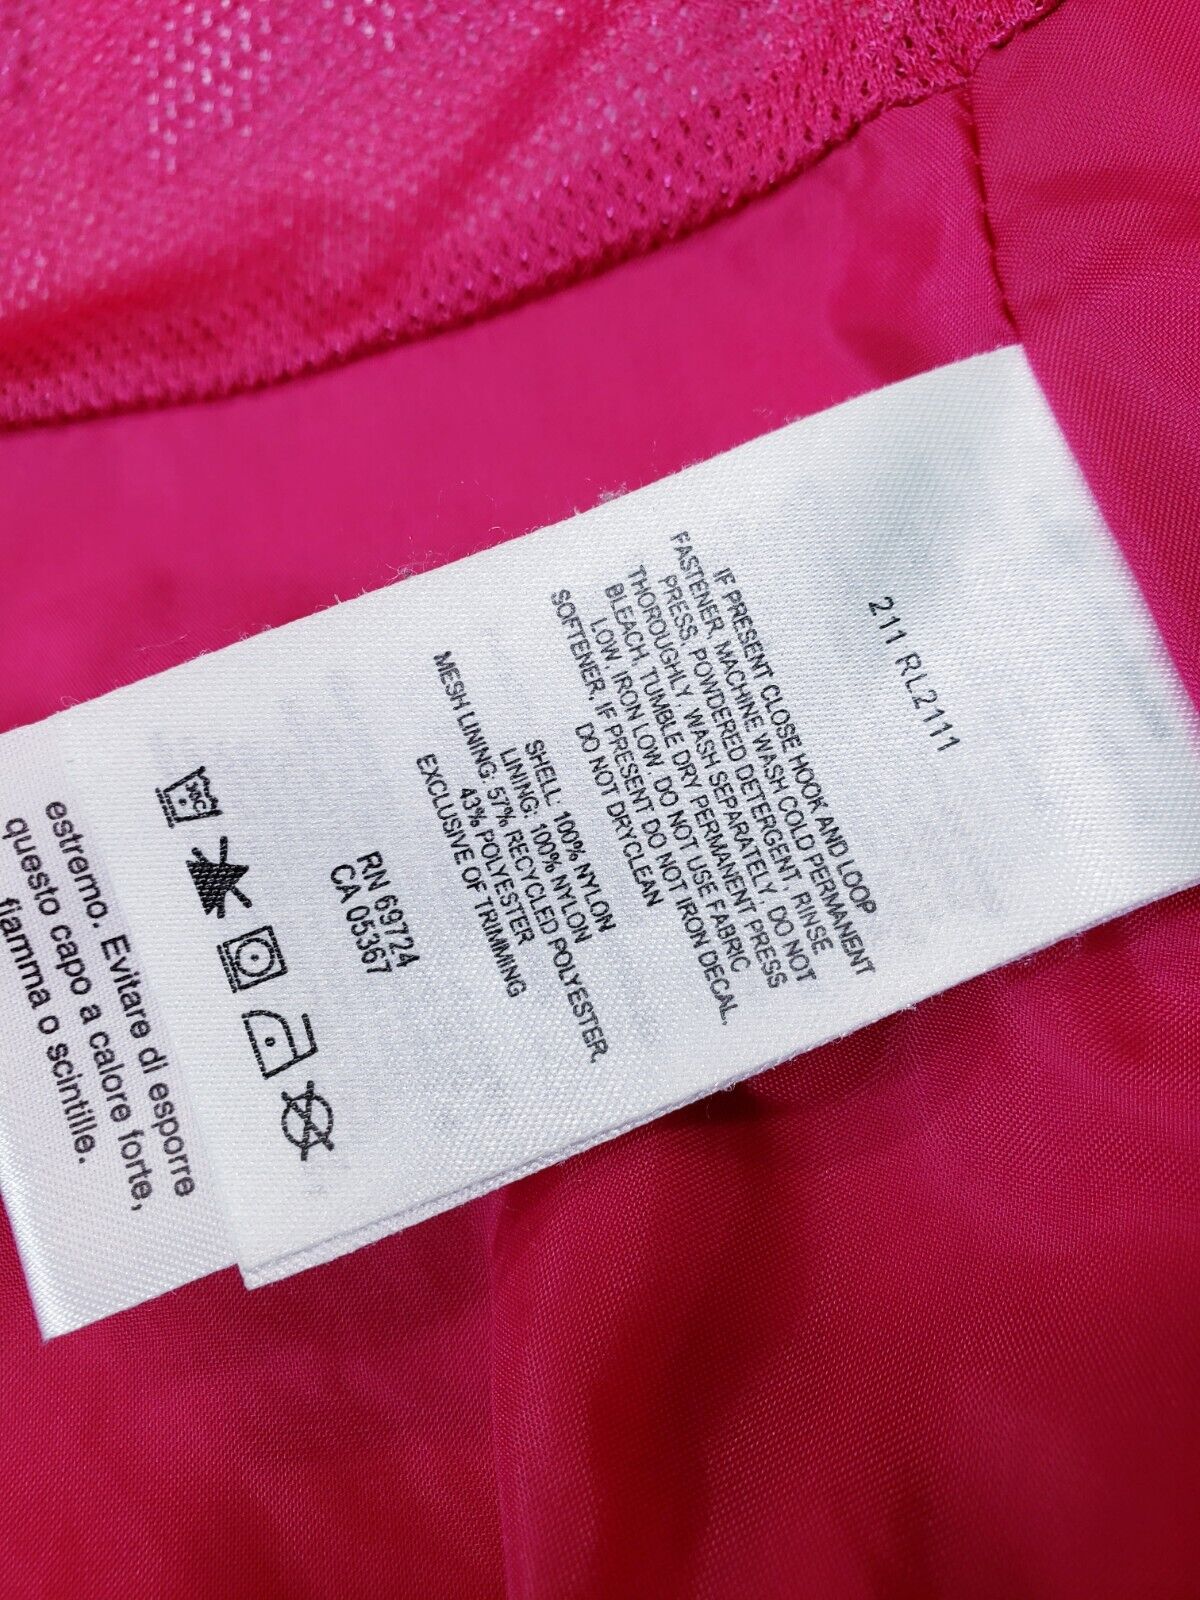 Columbia Omni-Tech Jacket Adult Women Large L Zip… - image 7